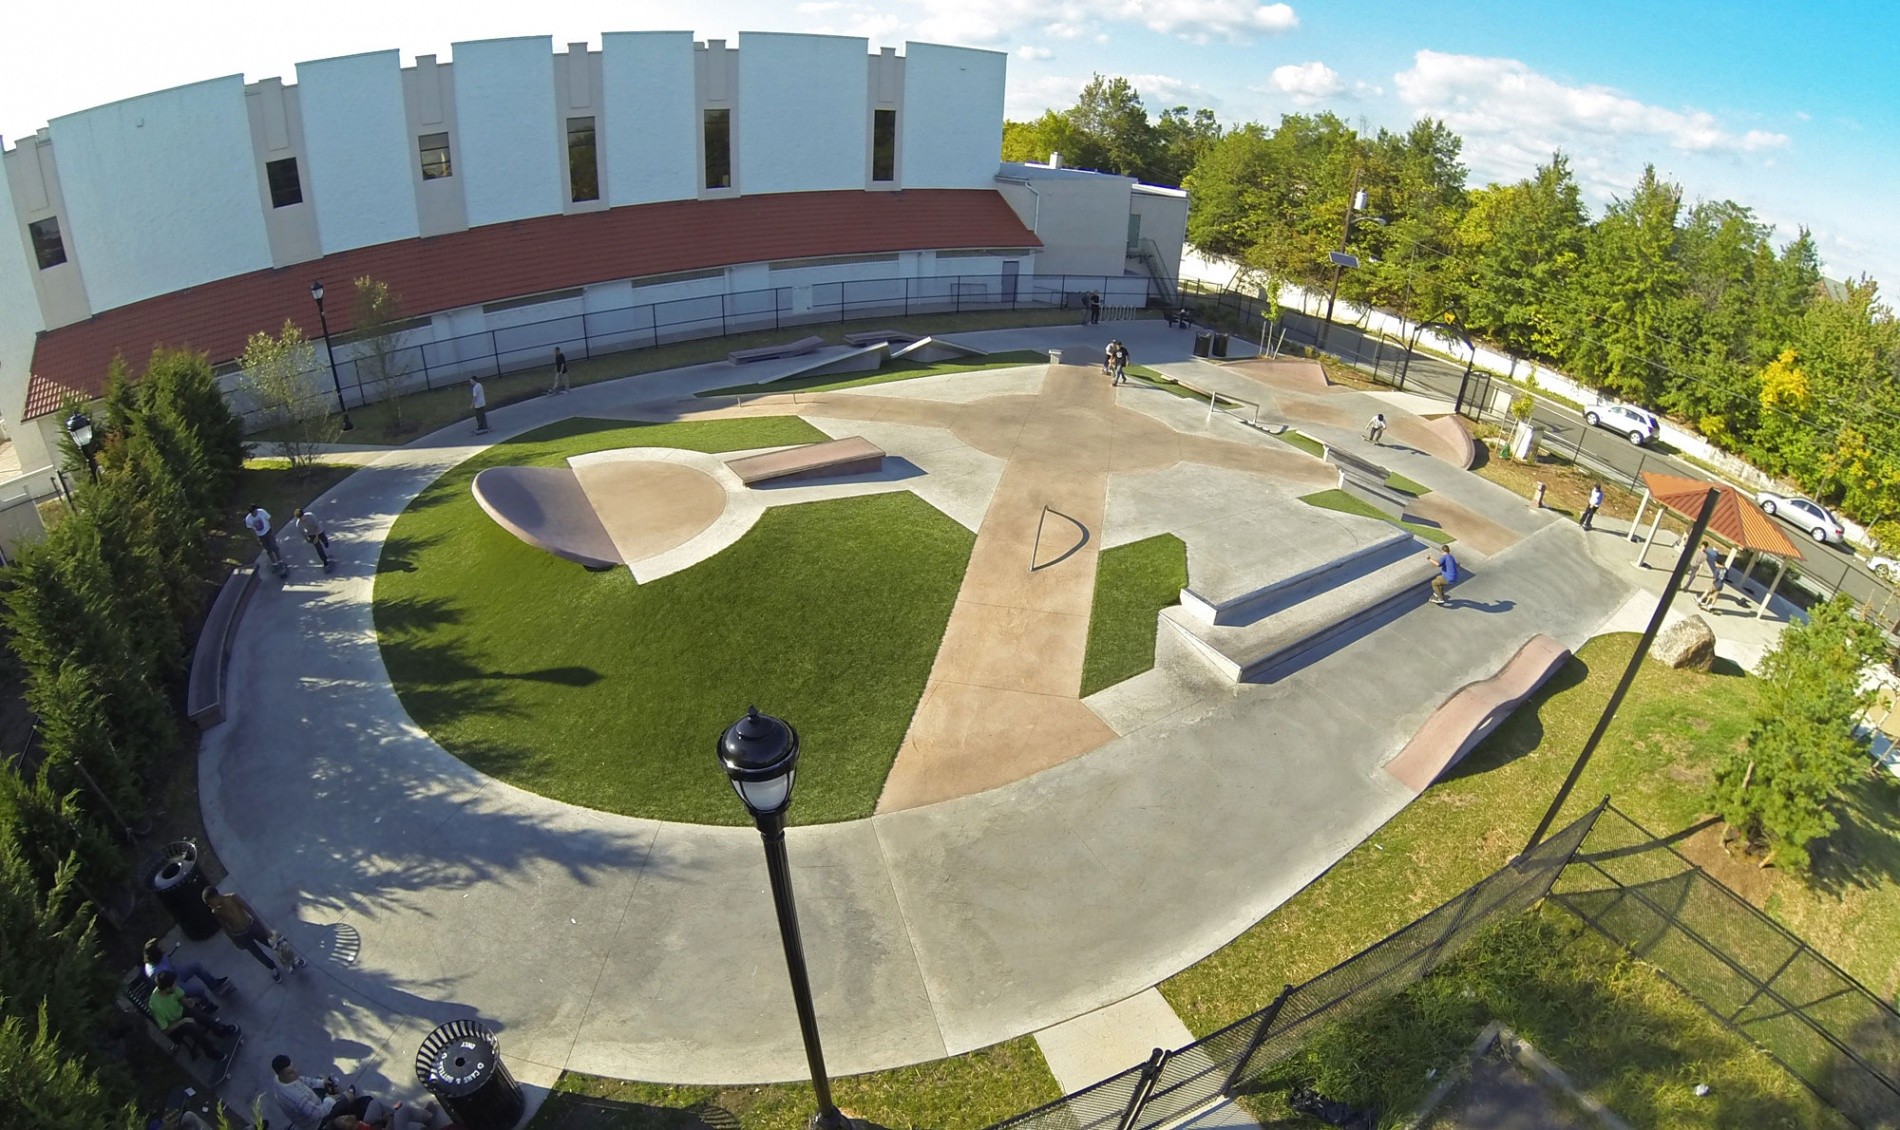 Holland Skate Plaza